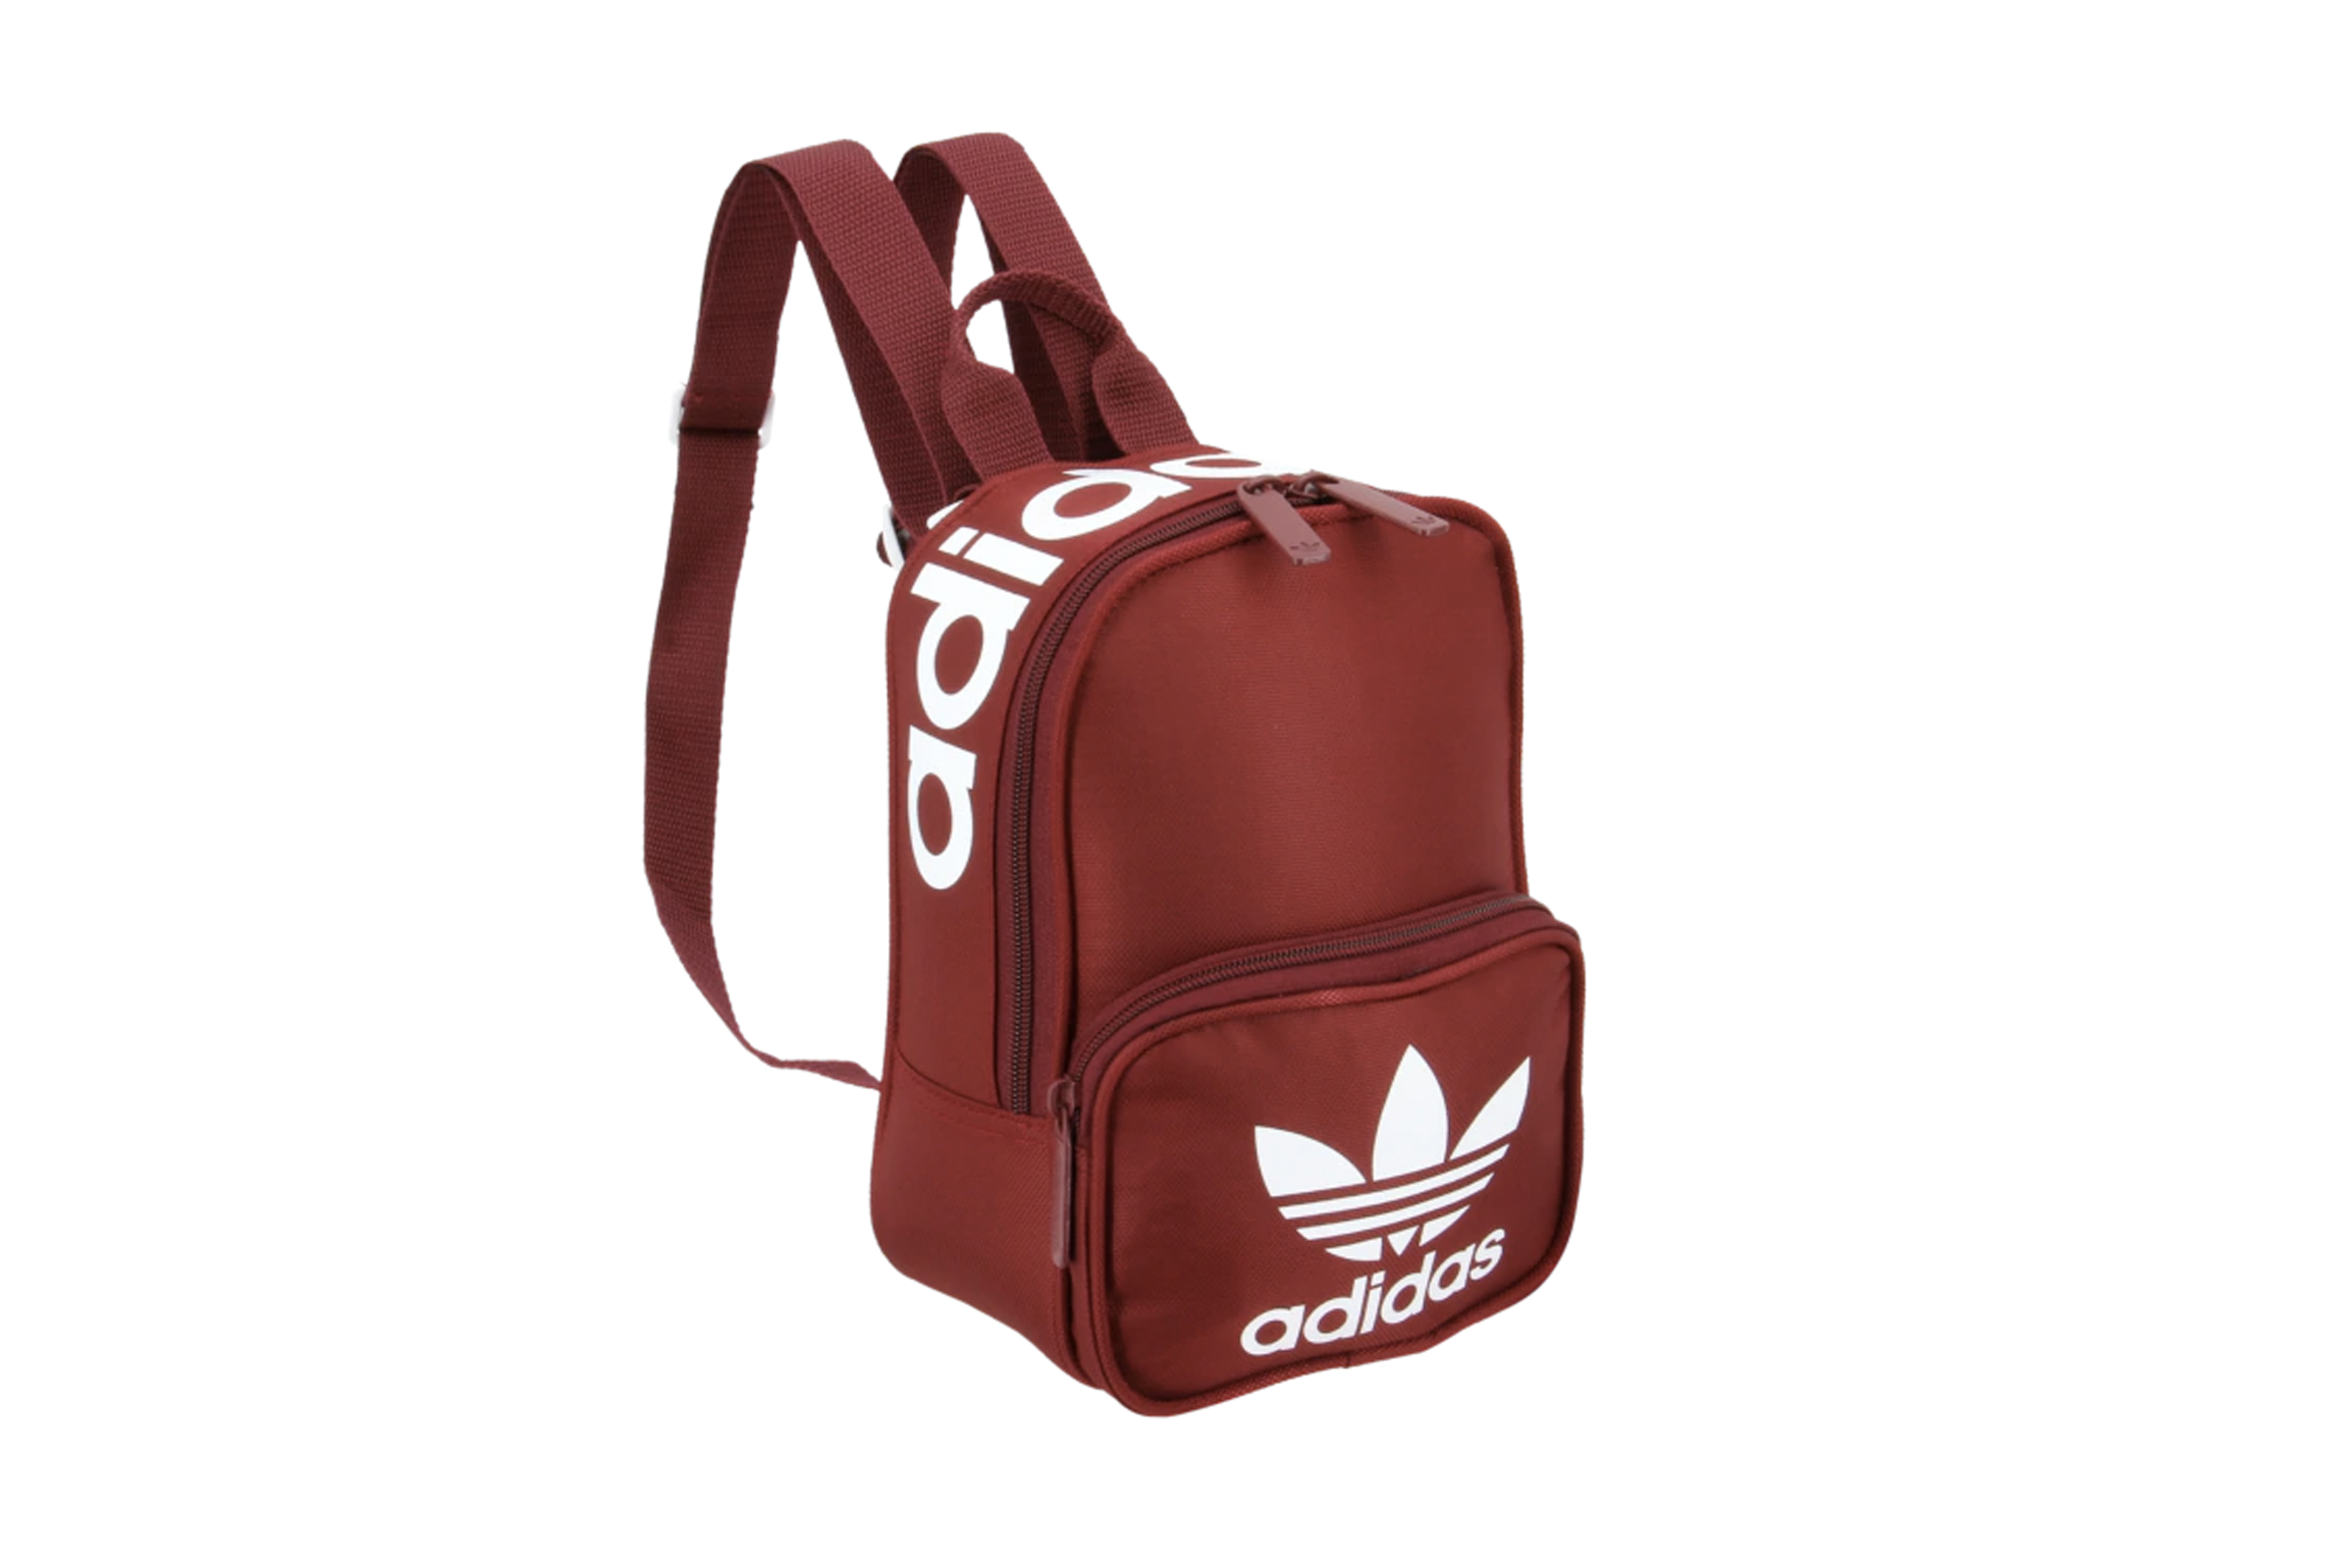 adidas Originals' Santiago Mini-Backpacks Red Black Pink Small Bag Sporty Trefoil Logo Print